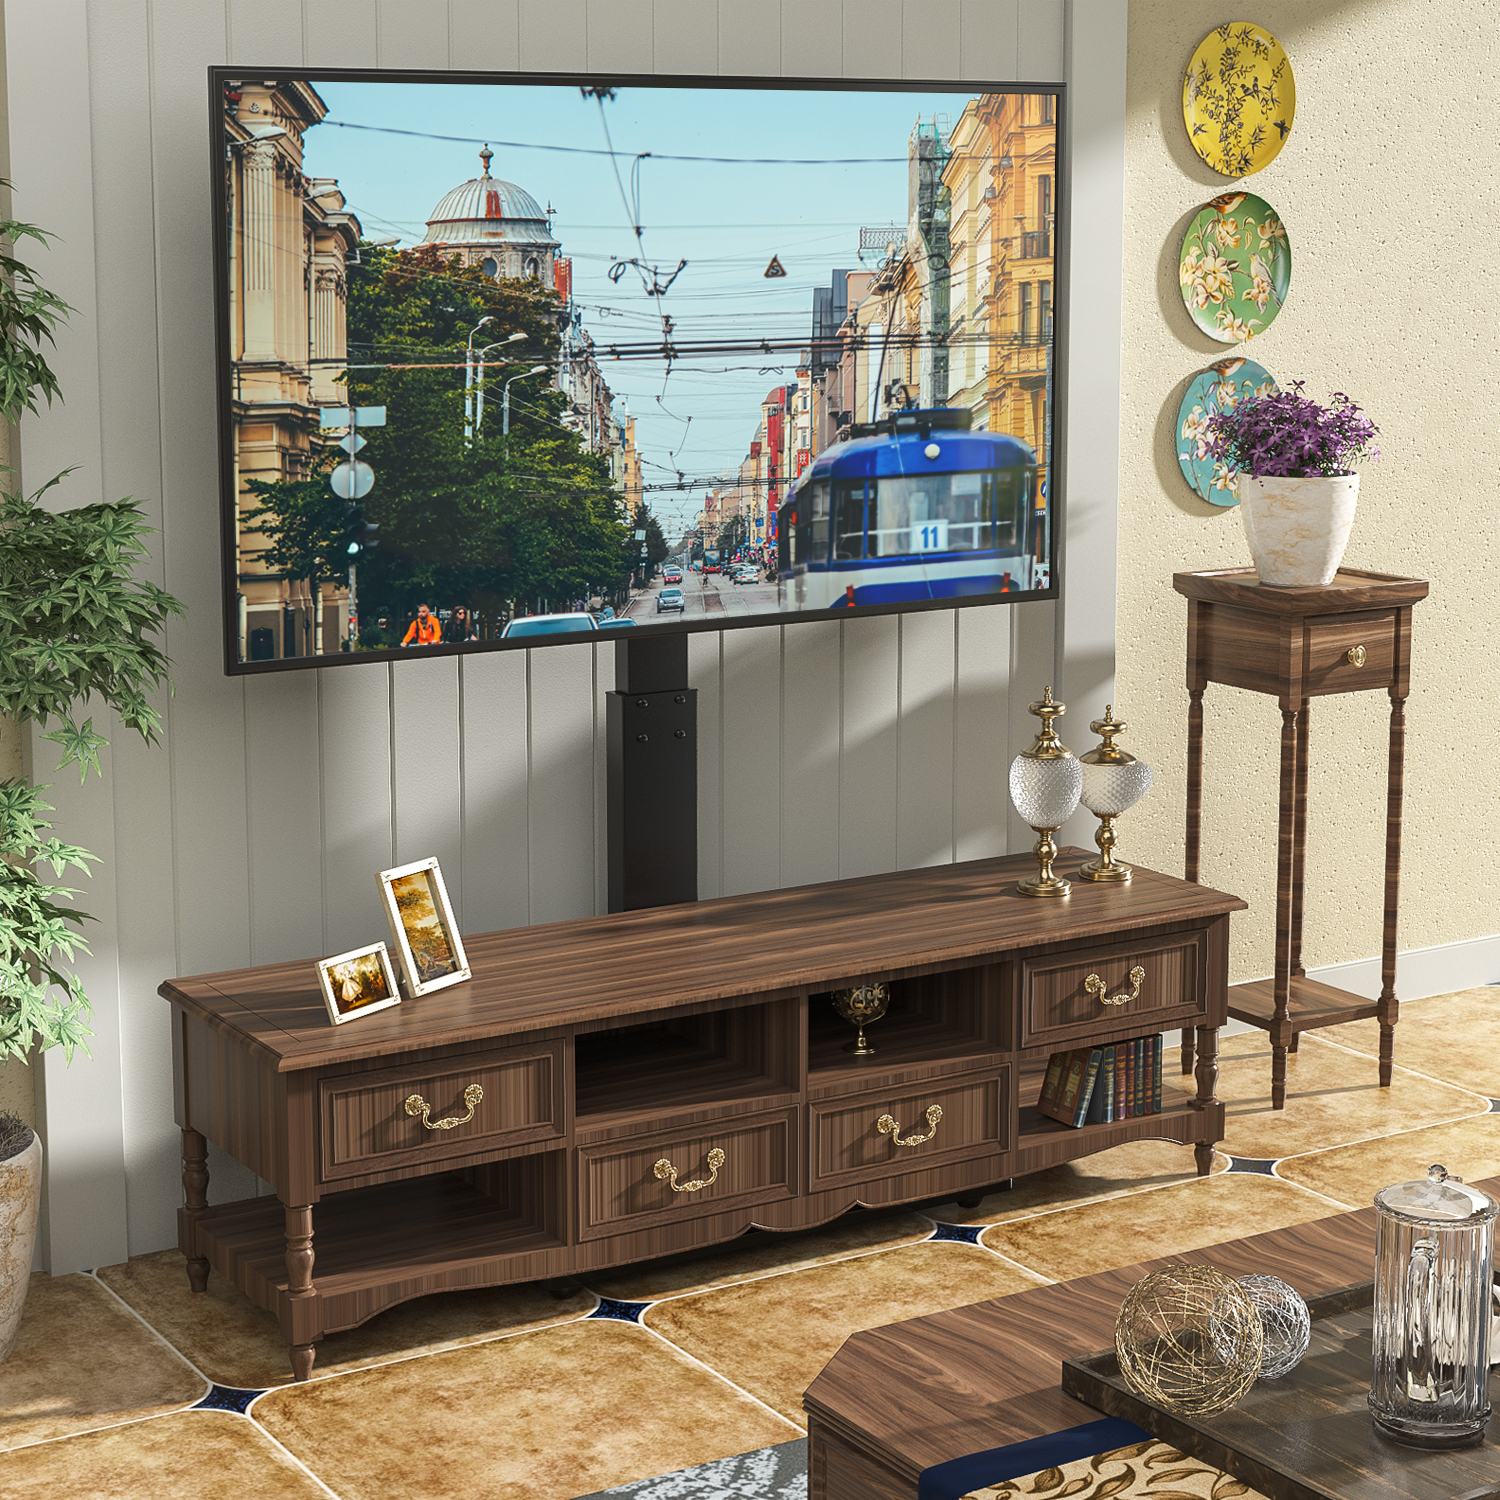 TAVR Modern Swivel Floor TV Stand Base for TVs up to 70 inch Black TV Mount - image 3 of 7